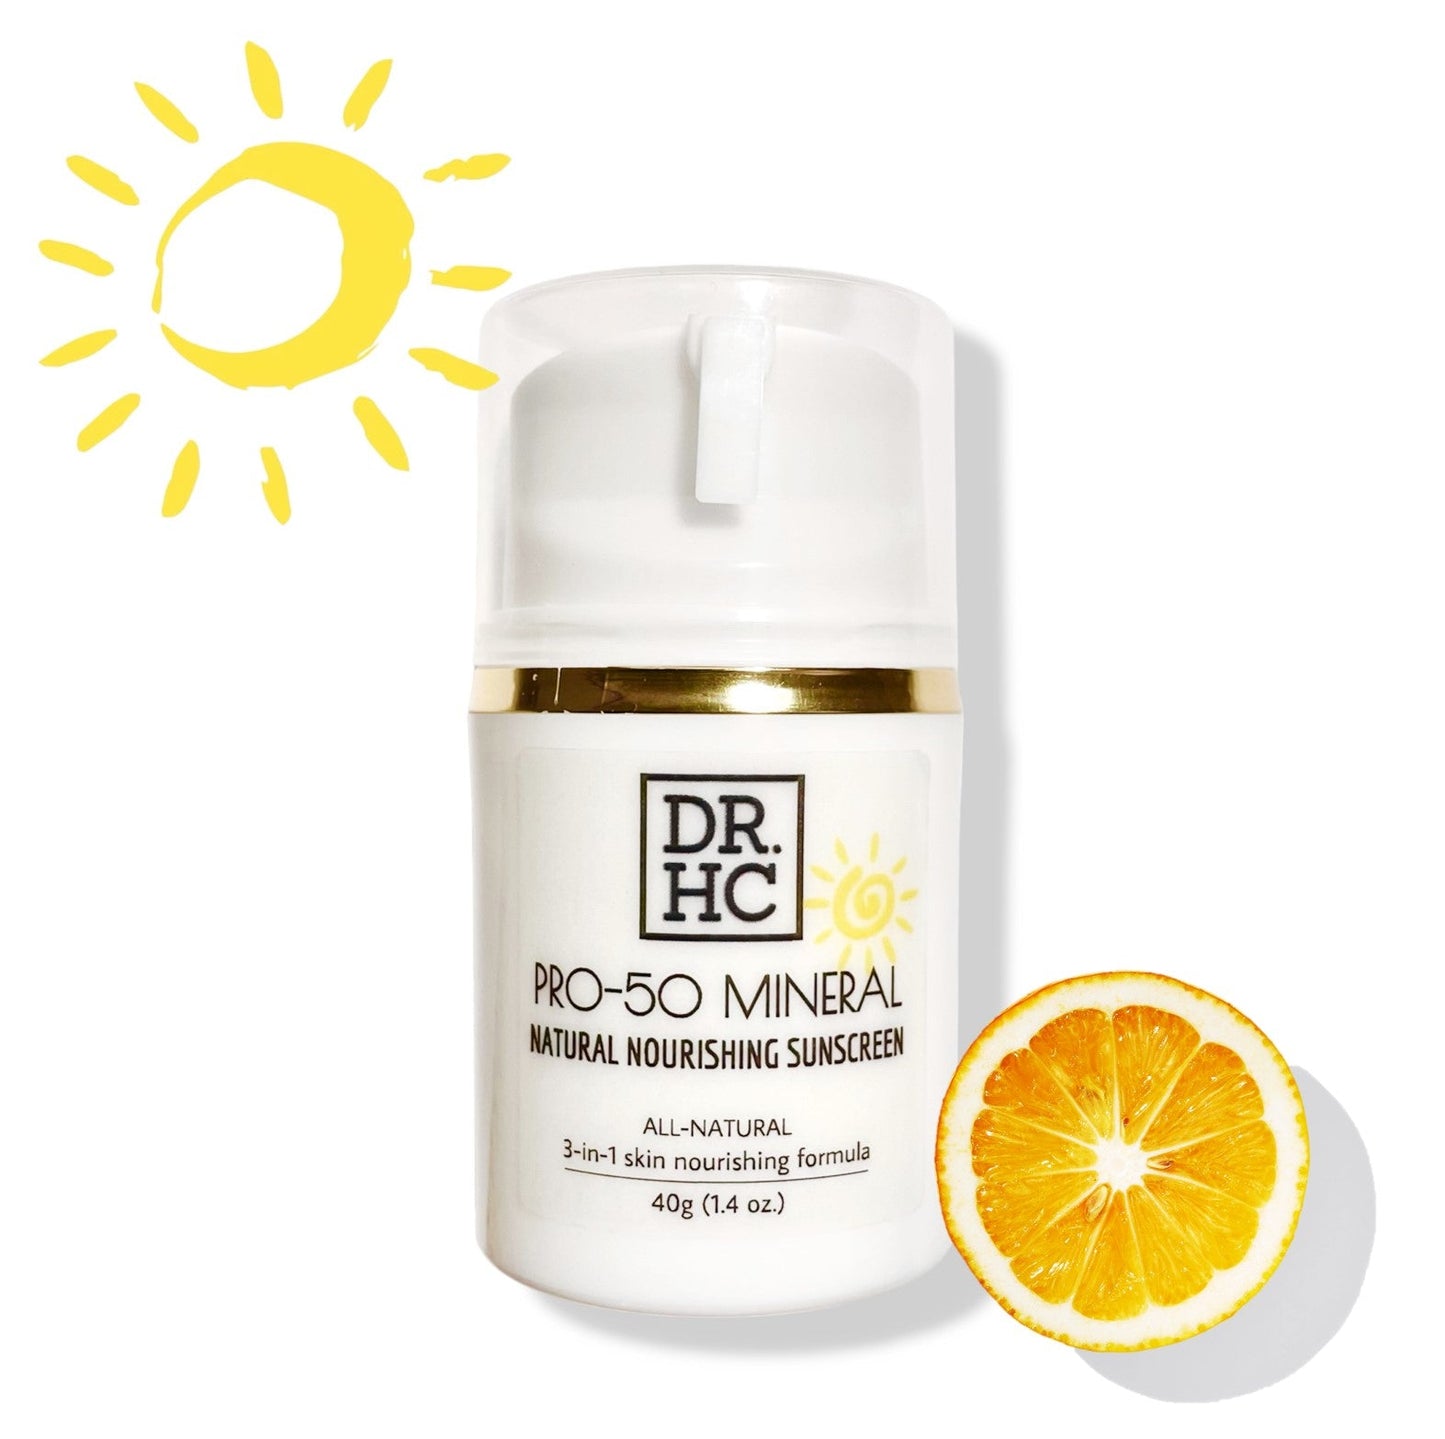 DR.HC Pro-50 Mineral Natural Nourishing Sunscreen (40g, 1.4oz.) (Natural UV Care, Skin brightening, Anti-aging, Damage Repair, Anti-inflammatory...)-2